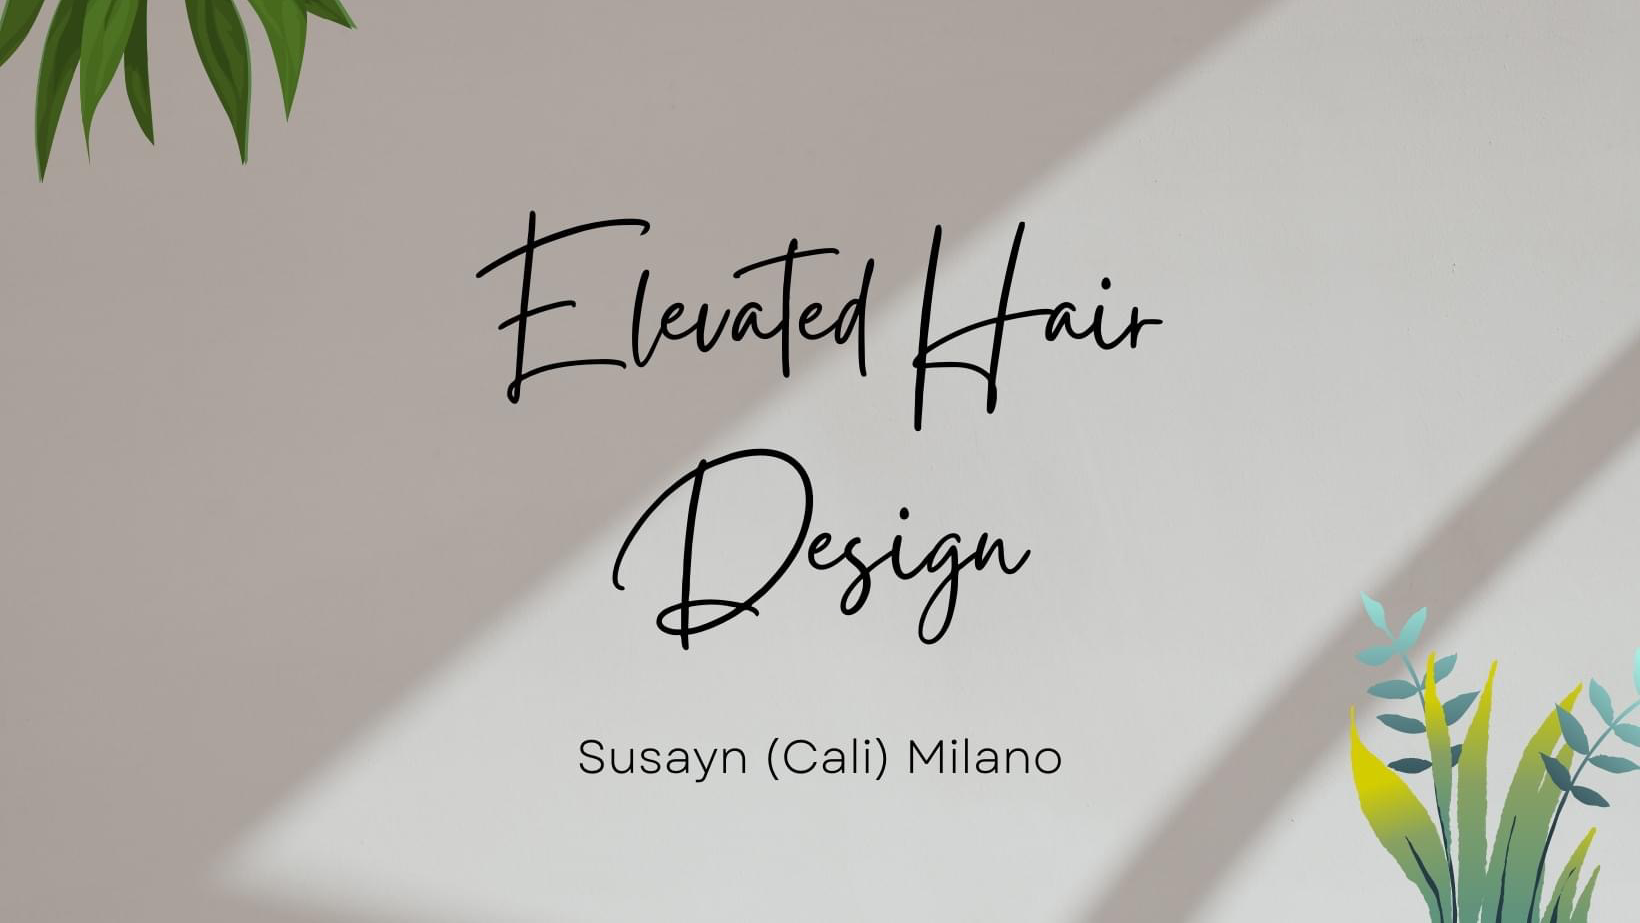 Elevated Hair Design